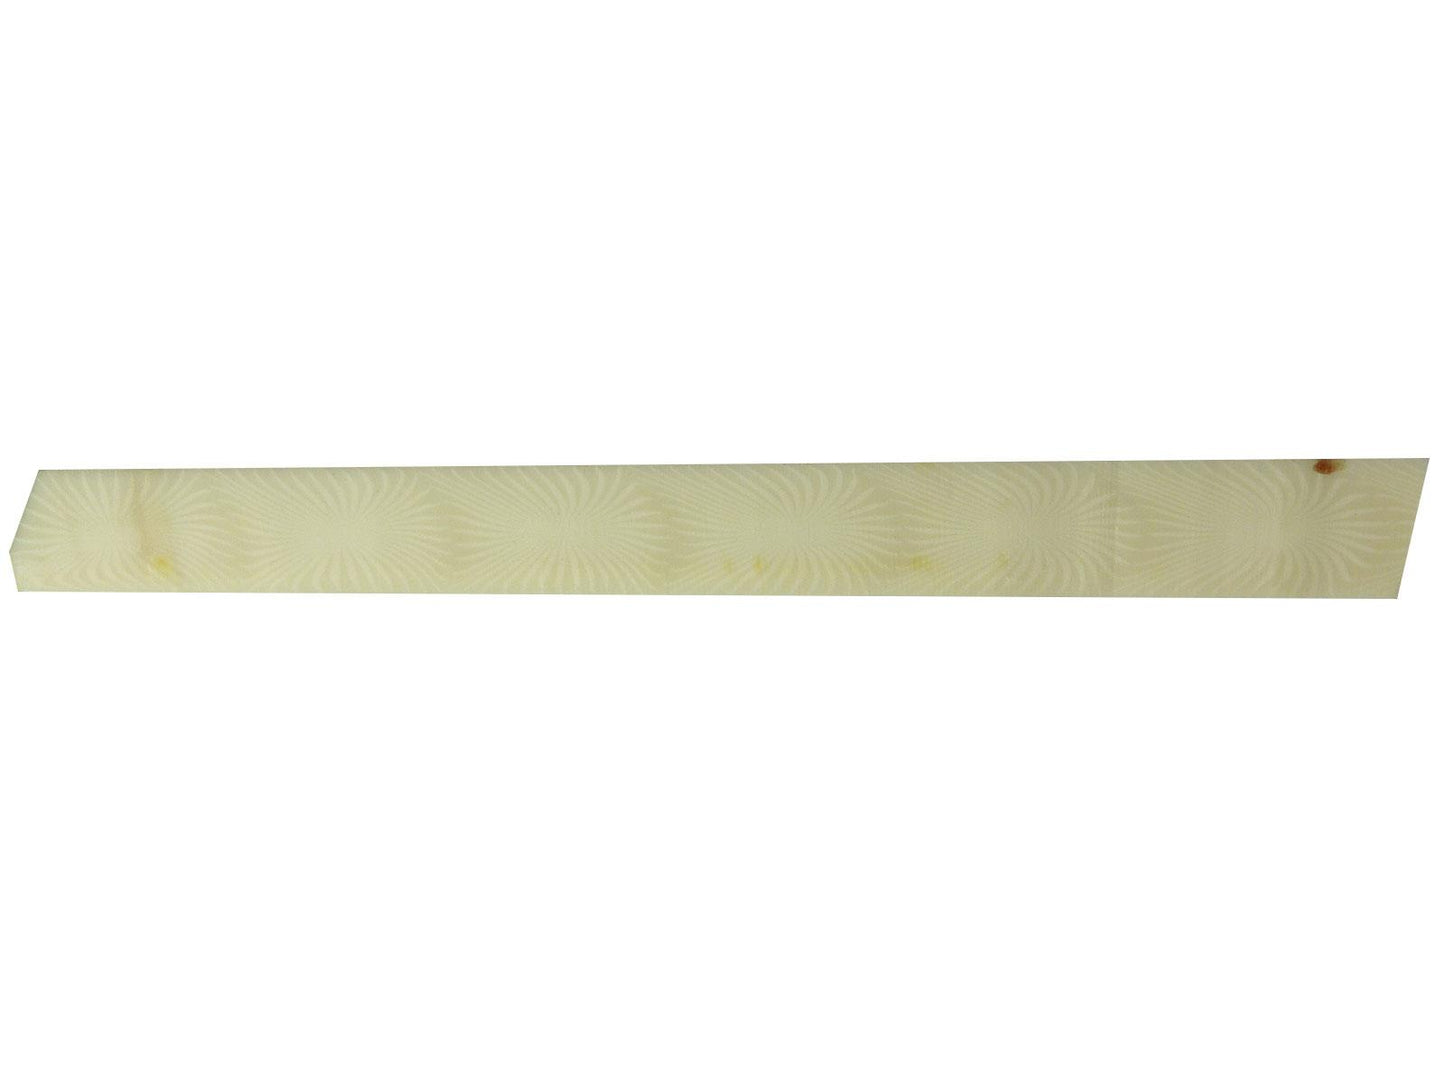 Incudo (Col 386) Ivory Casein (Galalith) Sheet - 240x100x10mm (9.4x3.94x0.39")